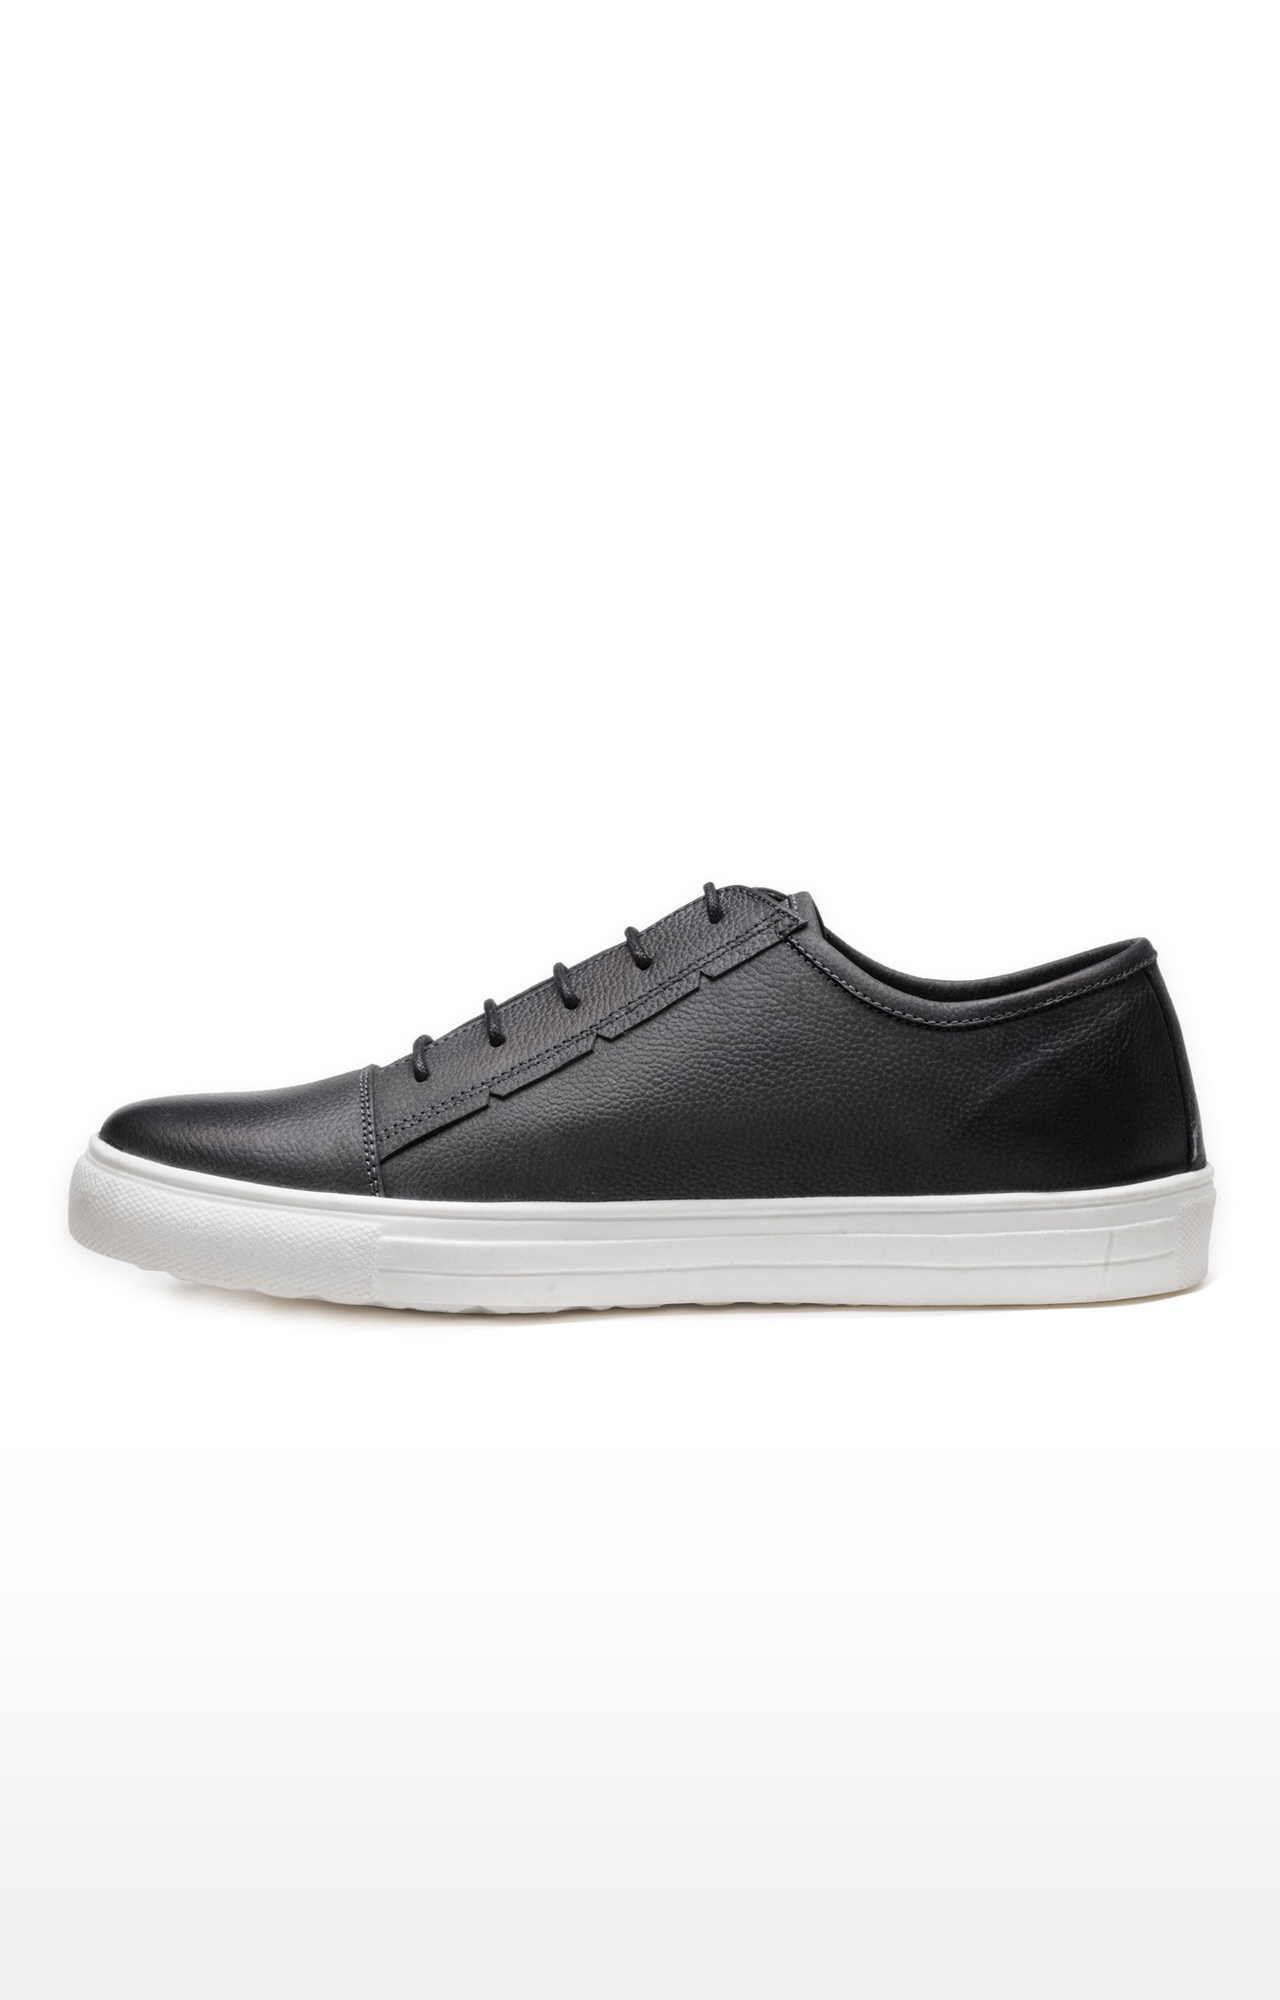 FRANCO LEONE | Franco Leone Charcoal Leather Sneakers 2